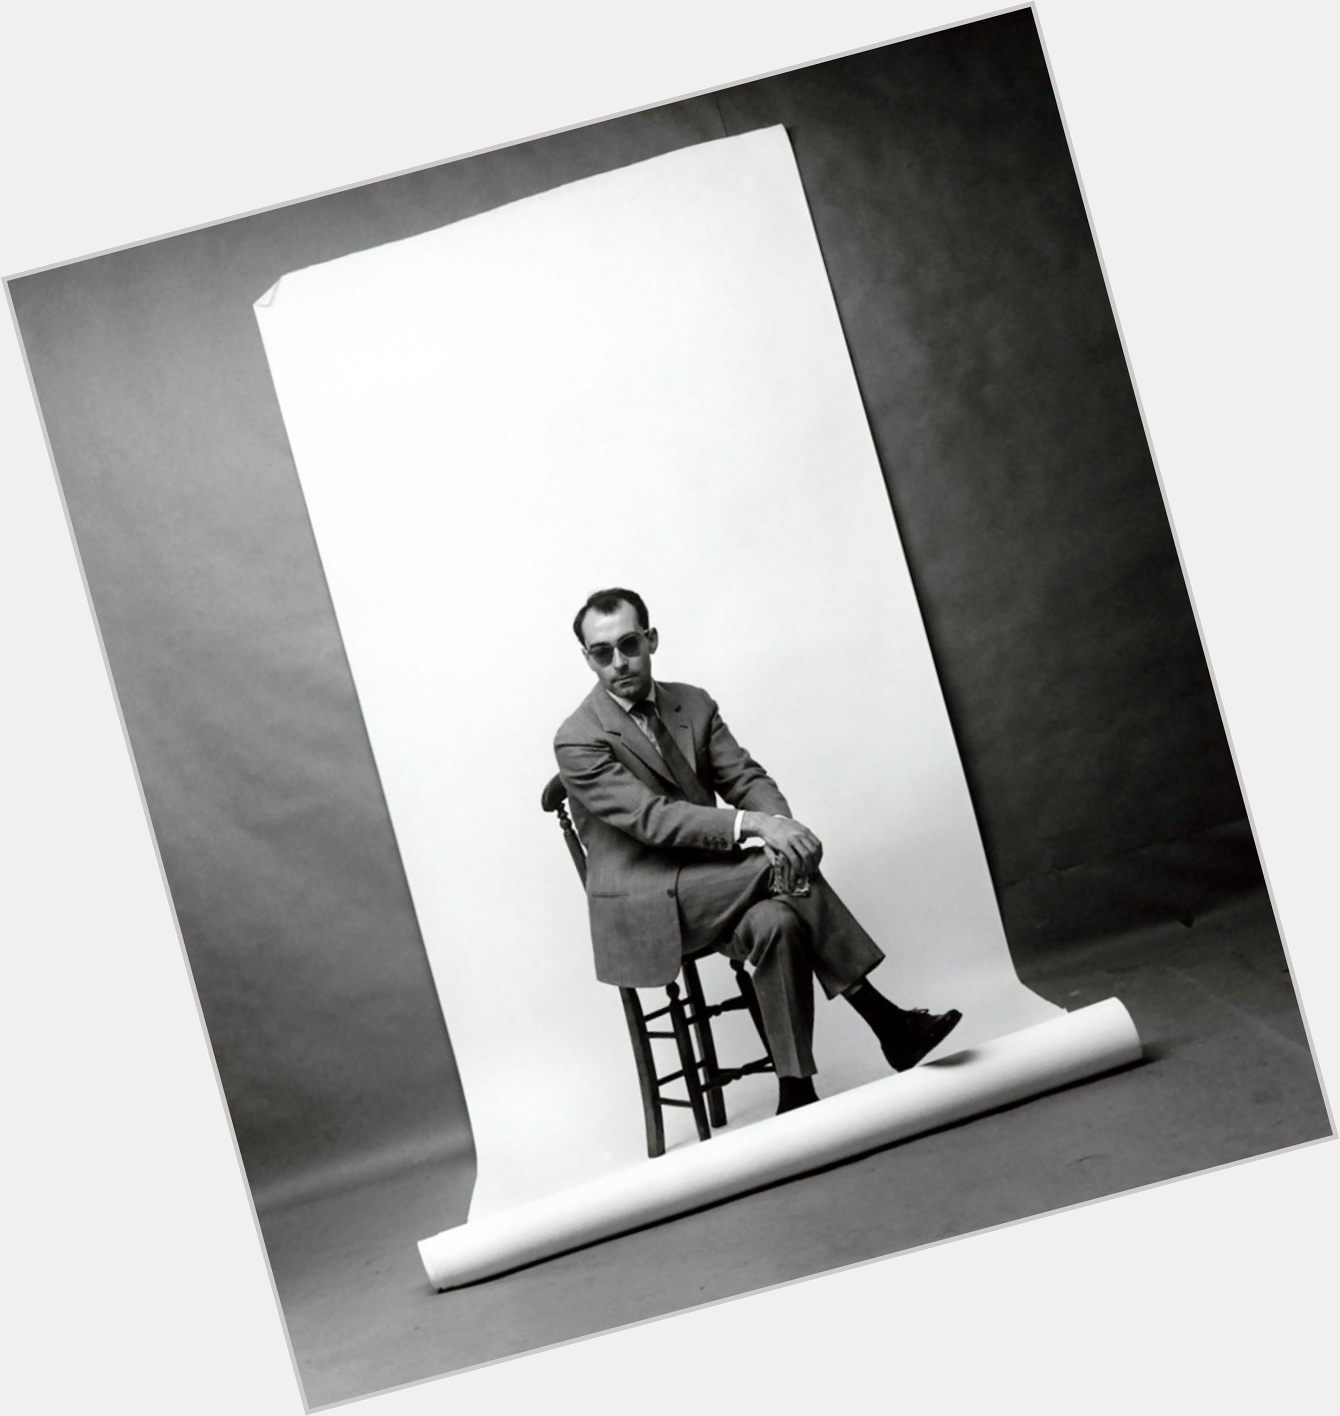  \" Happy 85th birthday to the master, Jean-Luc Godard! 